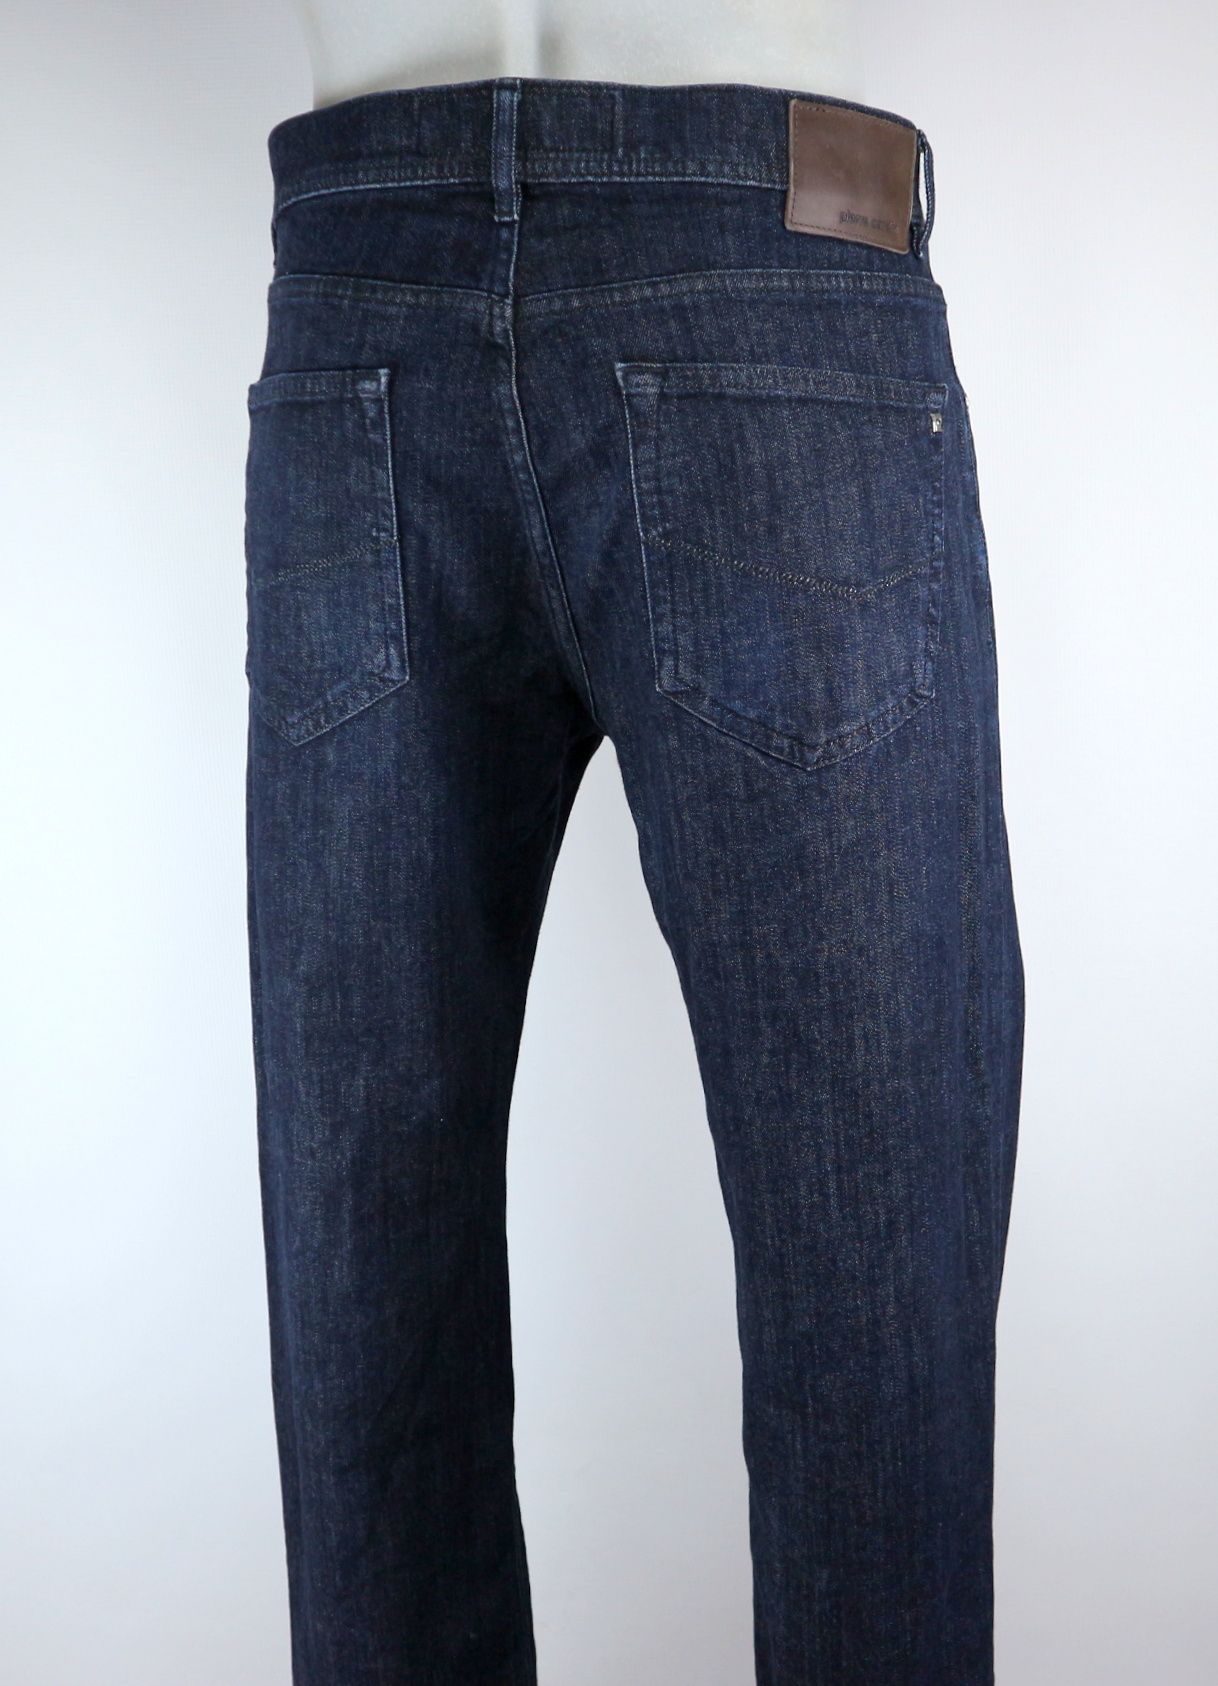 Pierre Cardin Pierre Cardin Lyon Fit jeans W38 L32 Size US 38 / EU 54 - 1 Preview